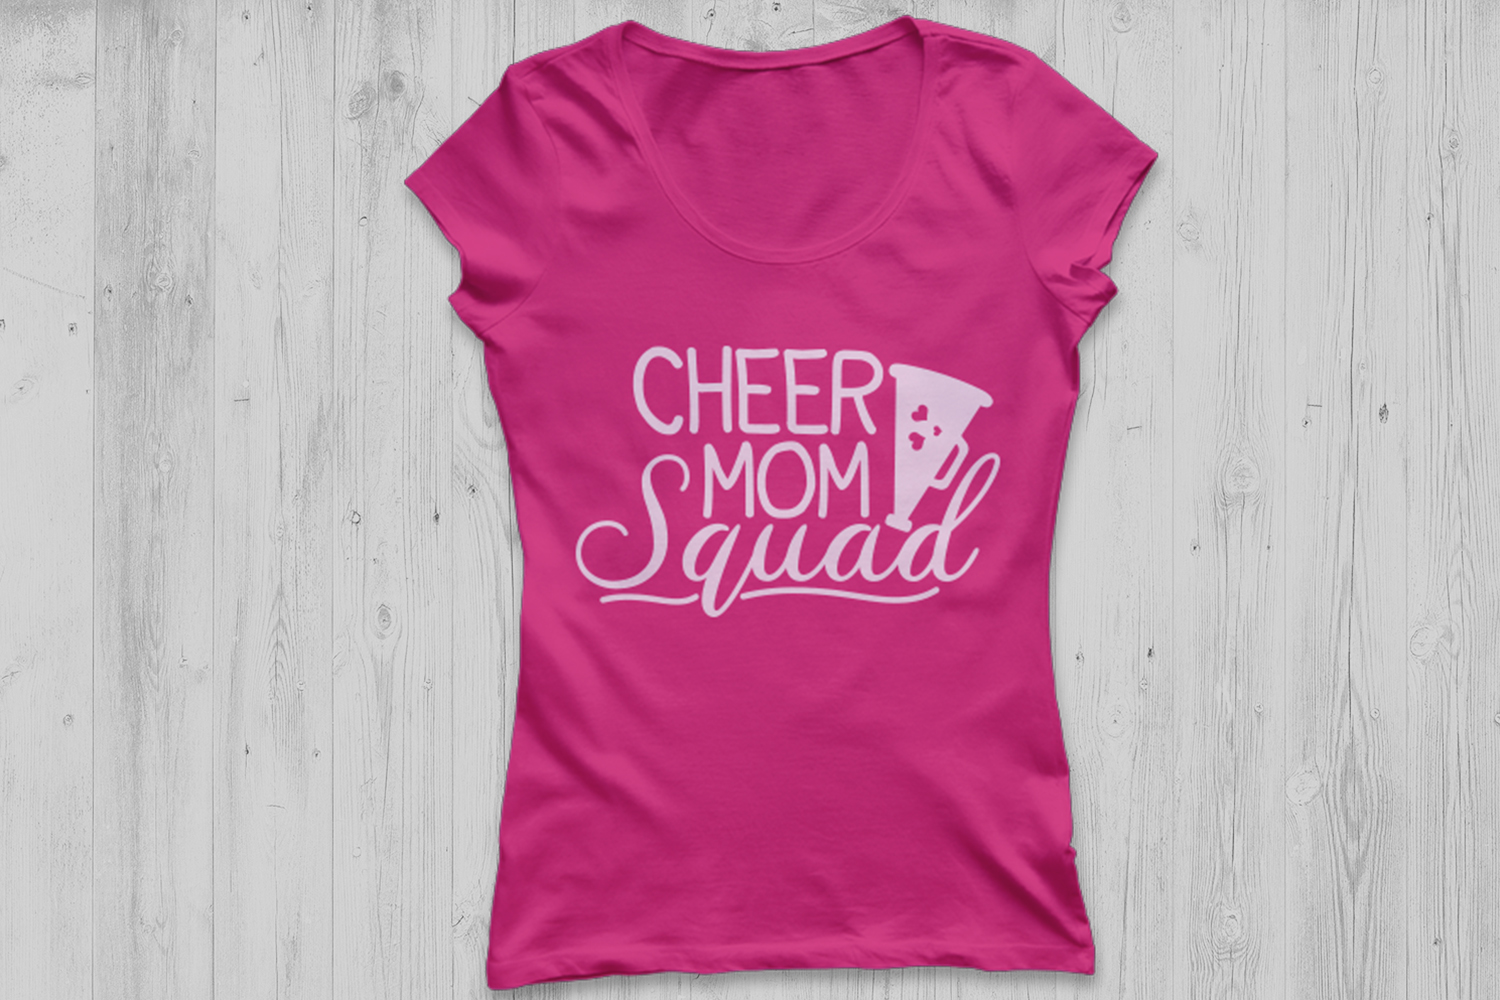 Download Cheer Mom Squad Svg, Cheer Mom Svg, Cheer Svg, Mom Squad Svg